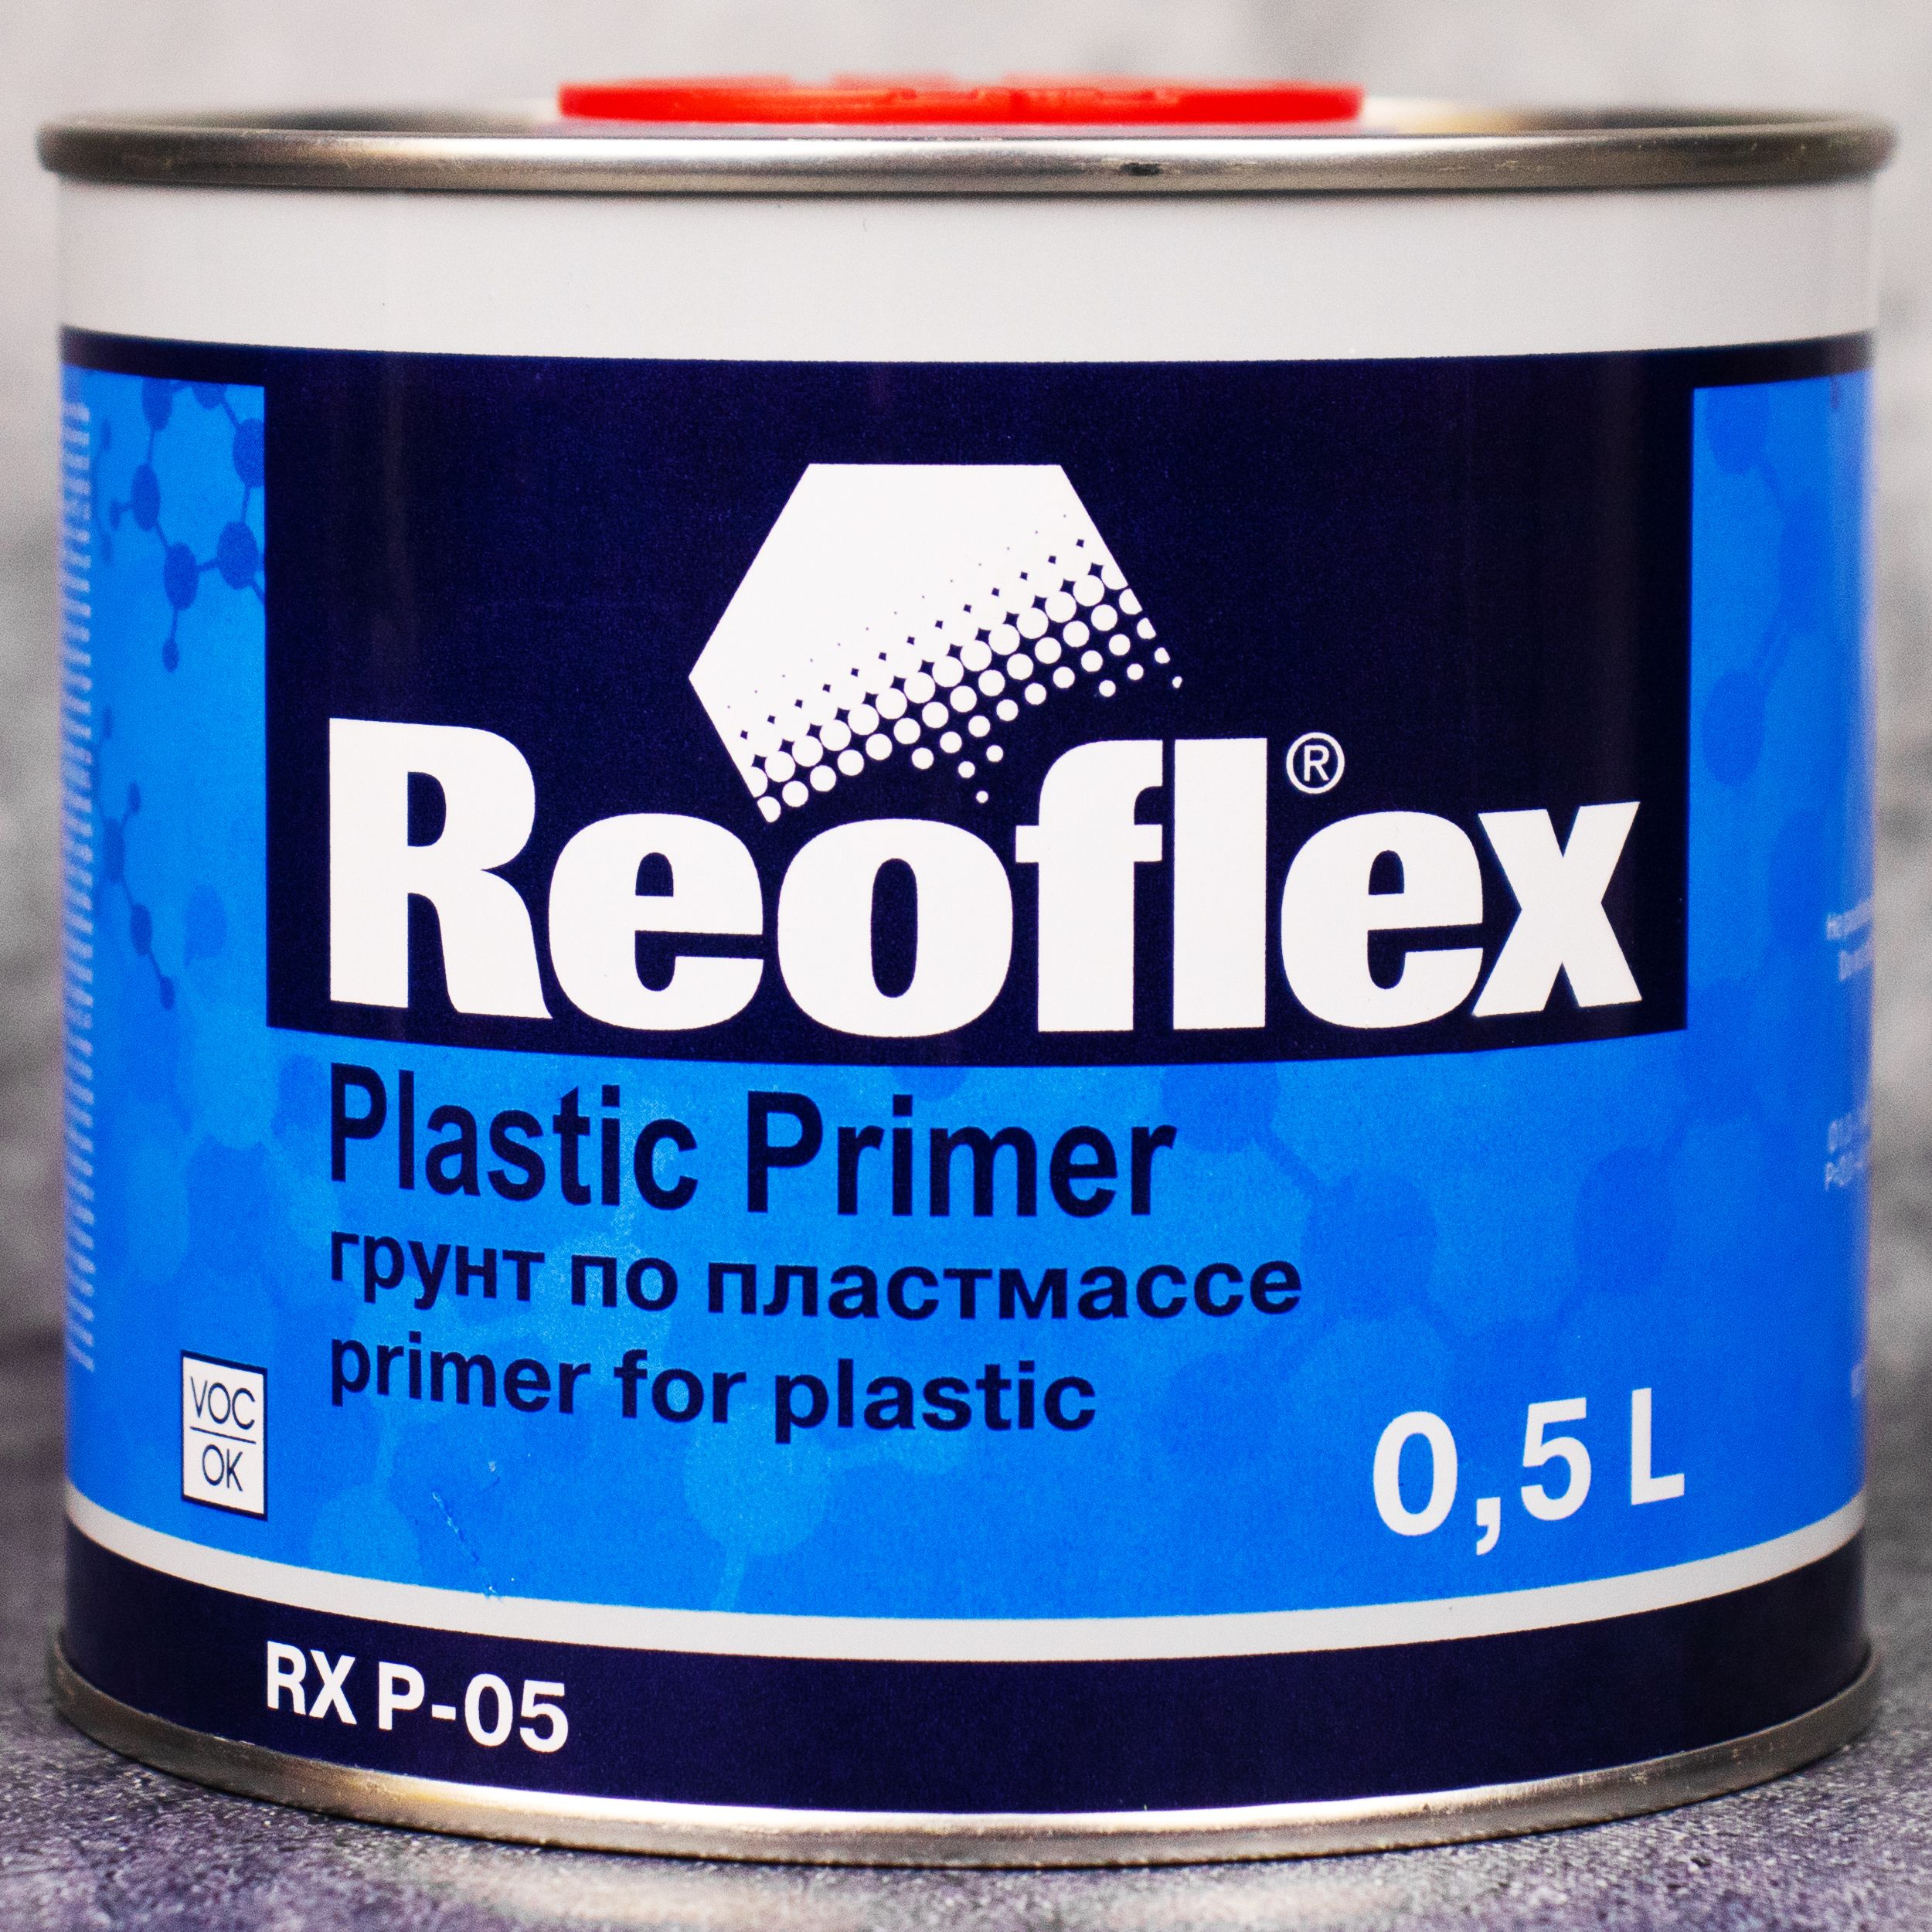 Праймер по пластику. Грунт по пластику Reoflex RX P-05 серый. Reoflex Plastic primer грунт по пластмассе. Грунт Reoflex Plastic primer прозрачный. Грунт по пластику реофлекс 5+1.